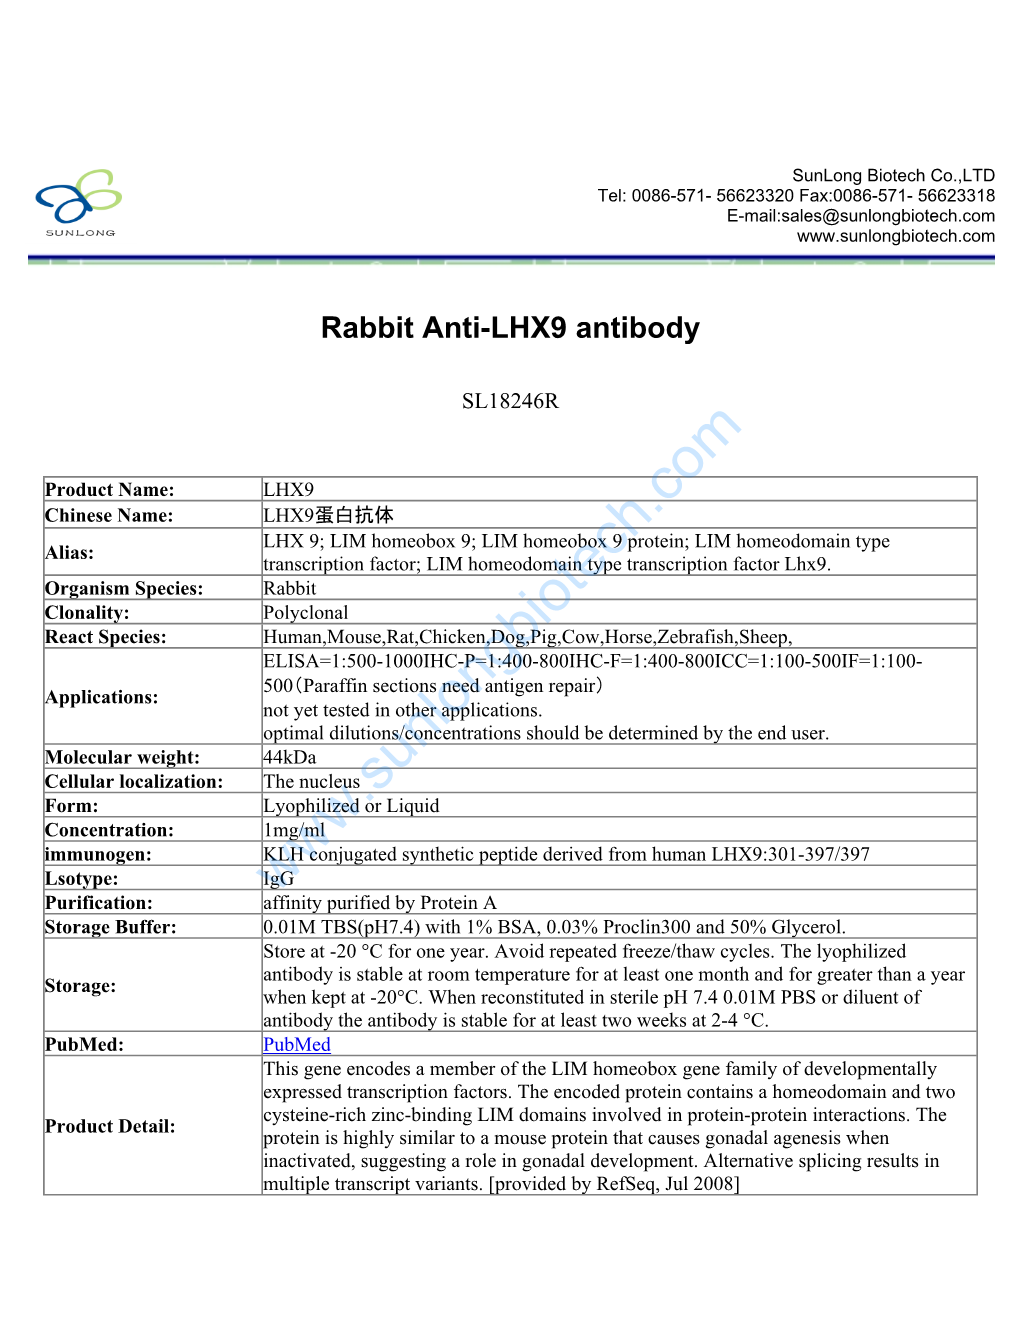 Rabbit Anti-LHX9 Antibody-SL18246R